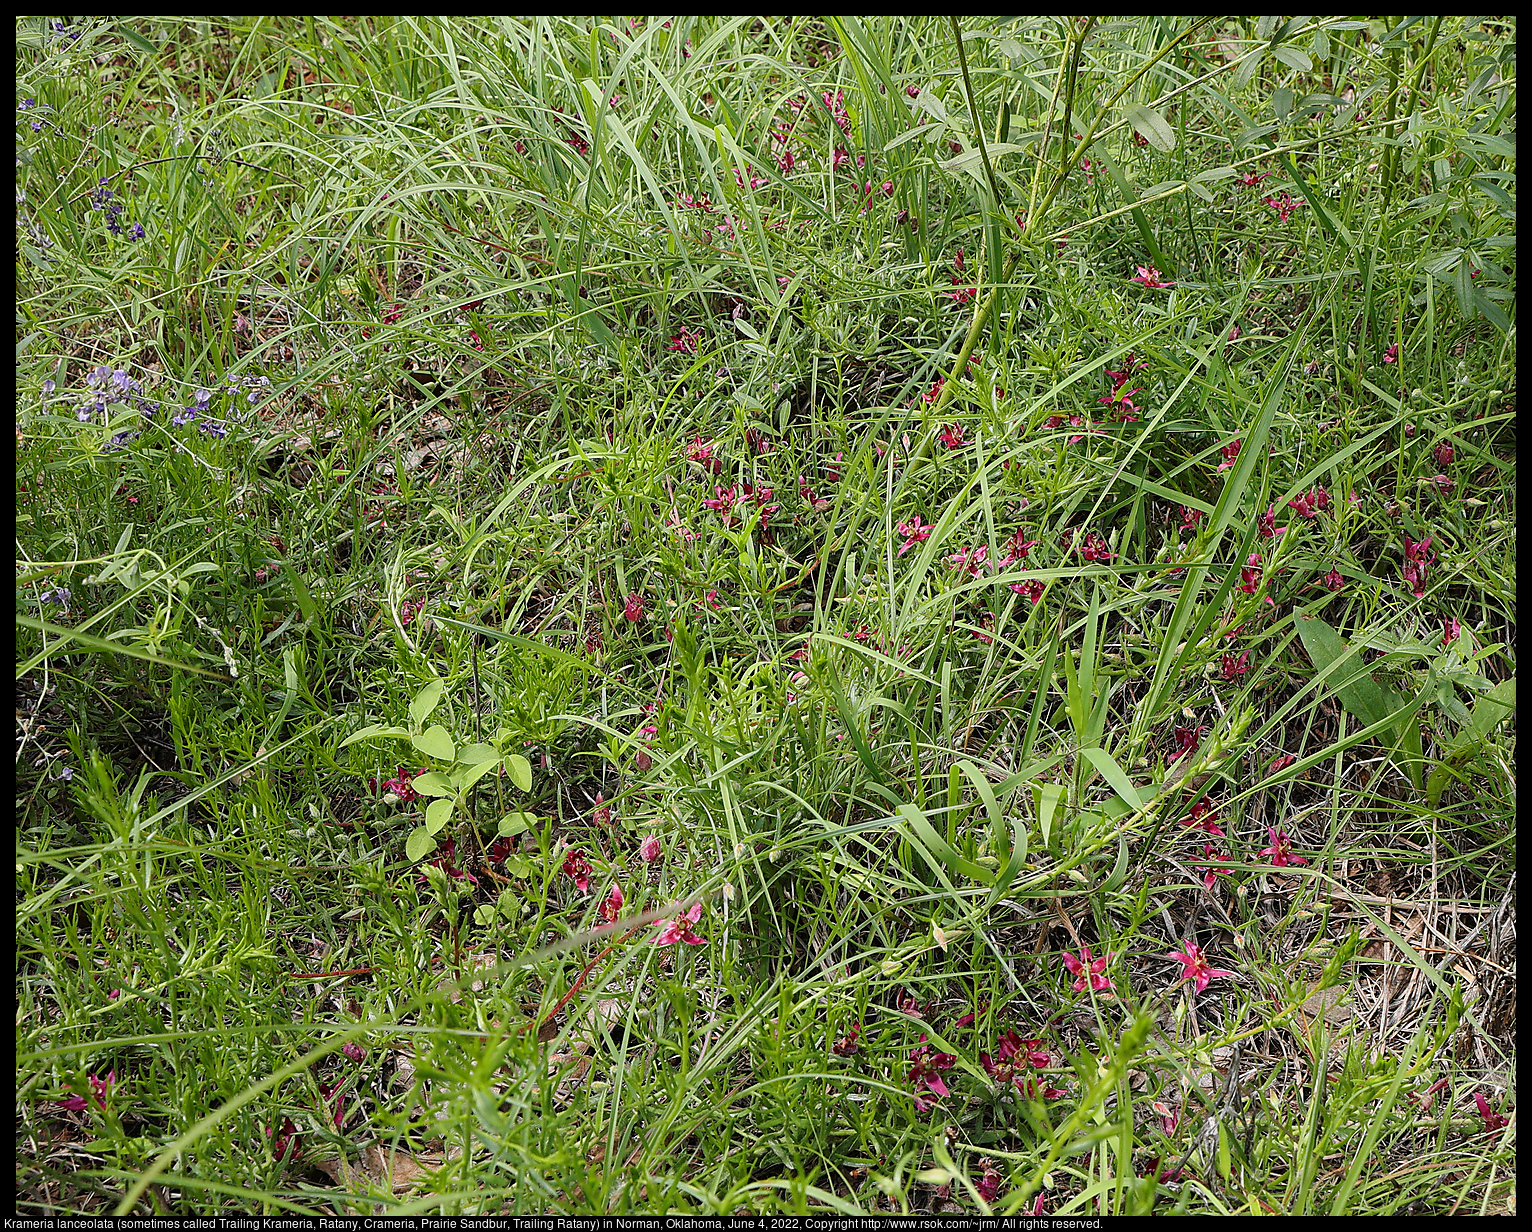 Krameria lanceolata (sometimes called Trailing Krameria, Ratany, Crameria, Prairie Sandbur, Trailing Ratany) in Norman, Oklahoma, June 4, 2022